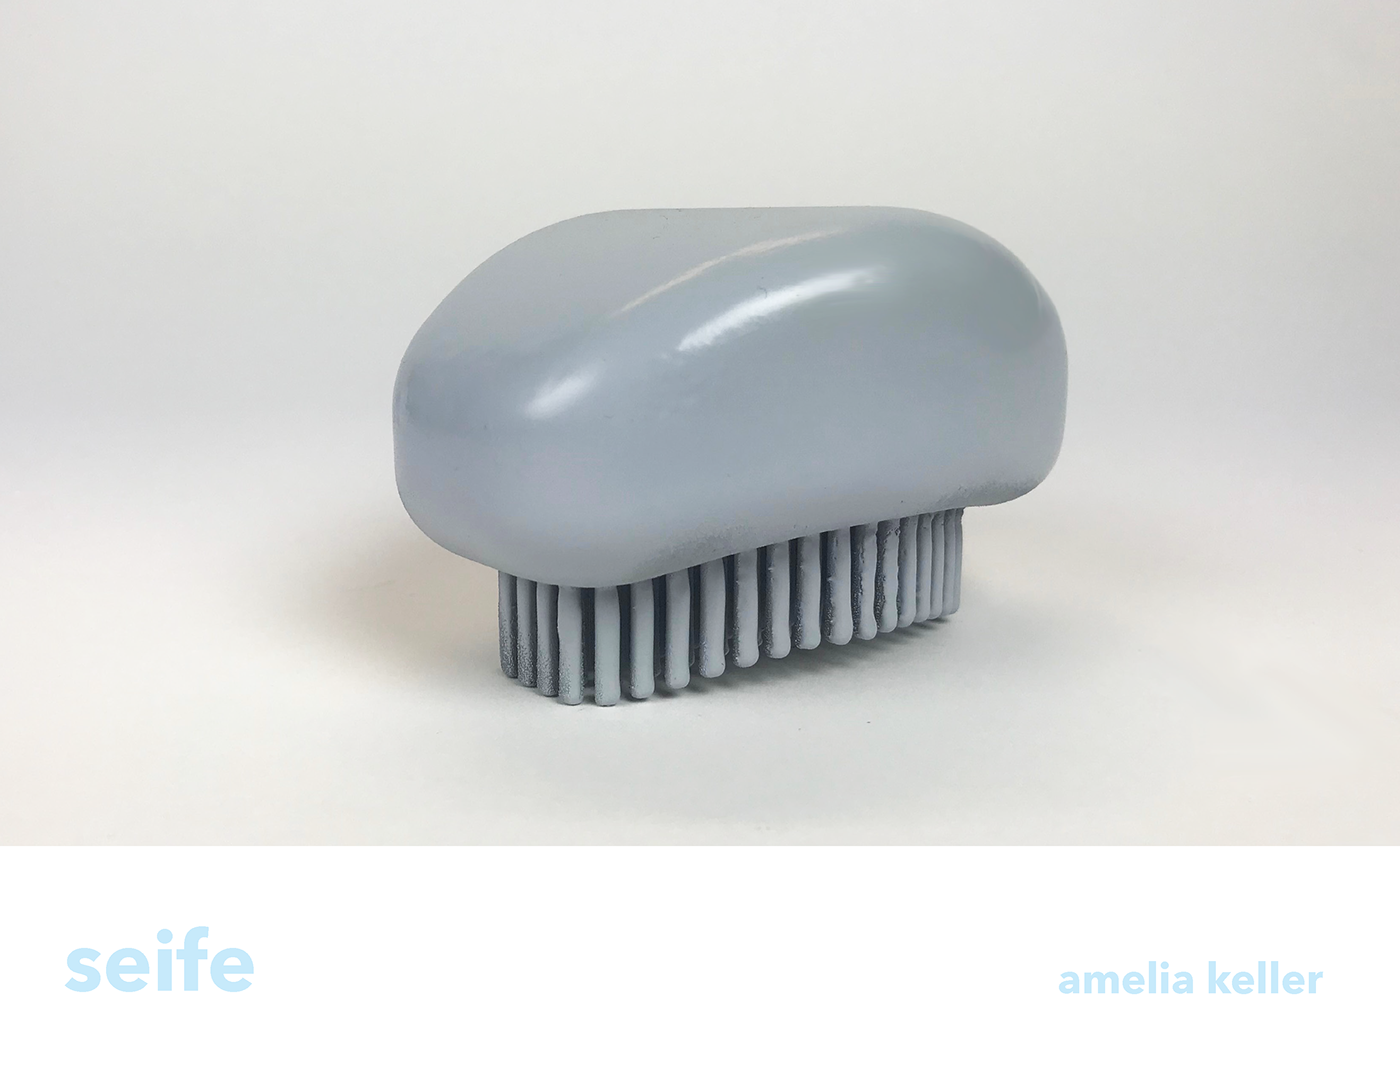 dandruff oily Exfoliation moisturize Frequency comfortable simple Curvature bristles soap